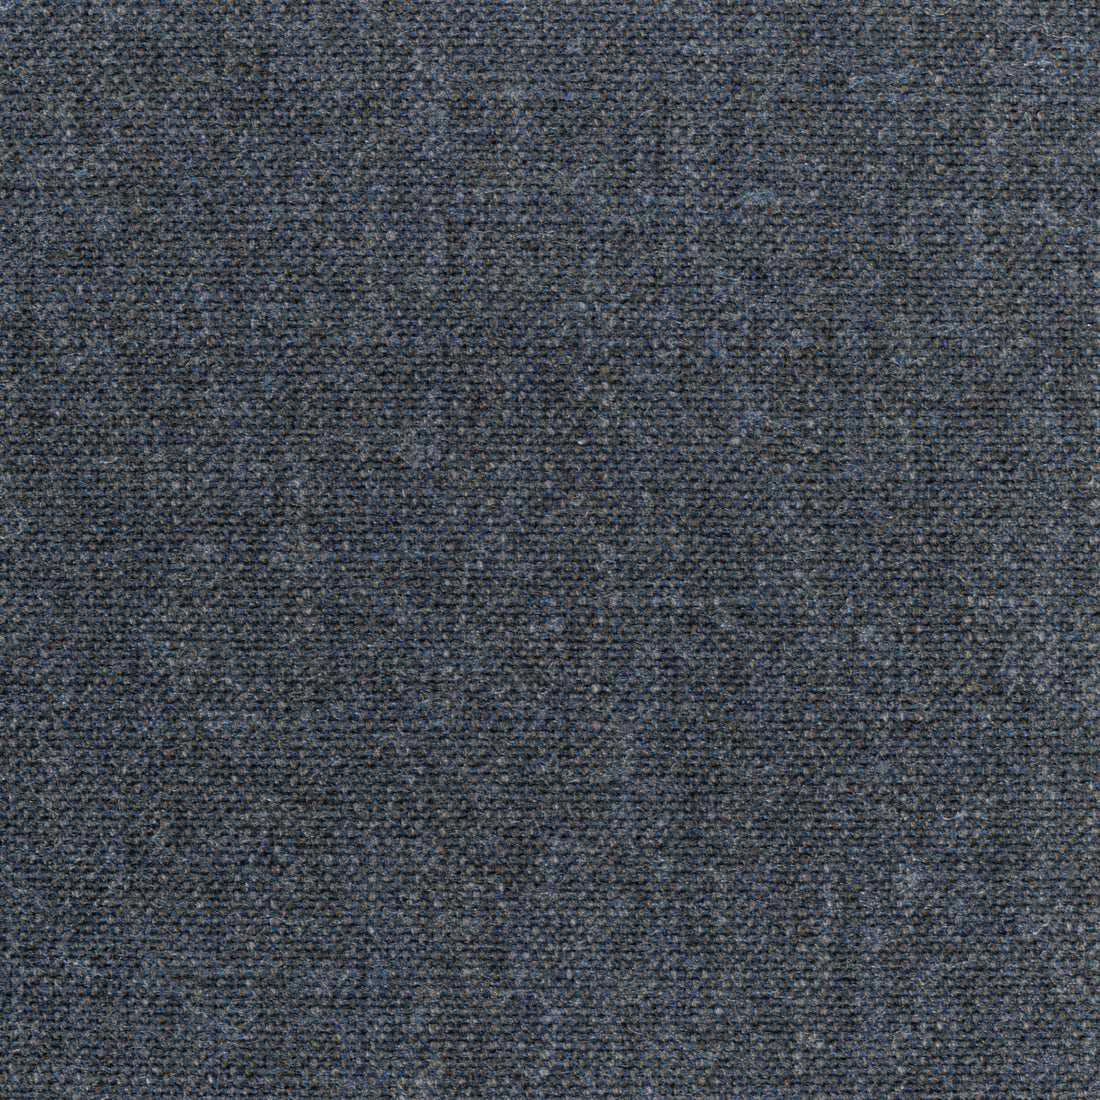 Kravet Smart fabric in 36112-815 color - pattern 36112.815.0 - by Kravet Smart in the Performance Kravetarmor collection